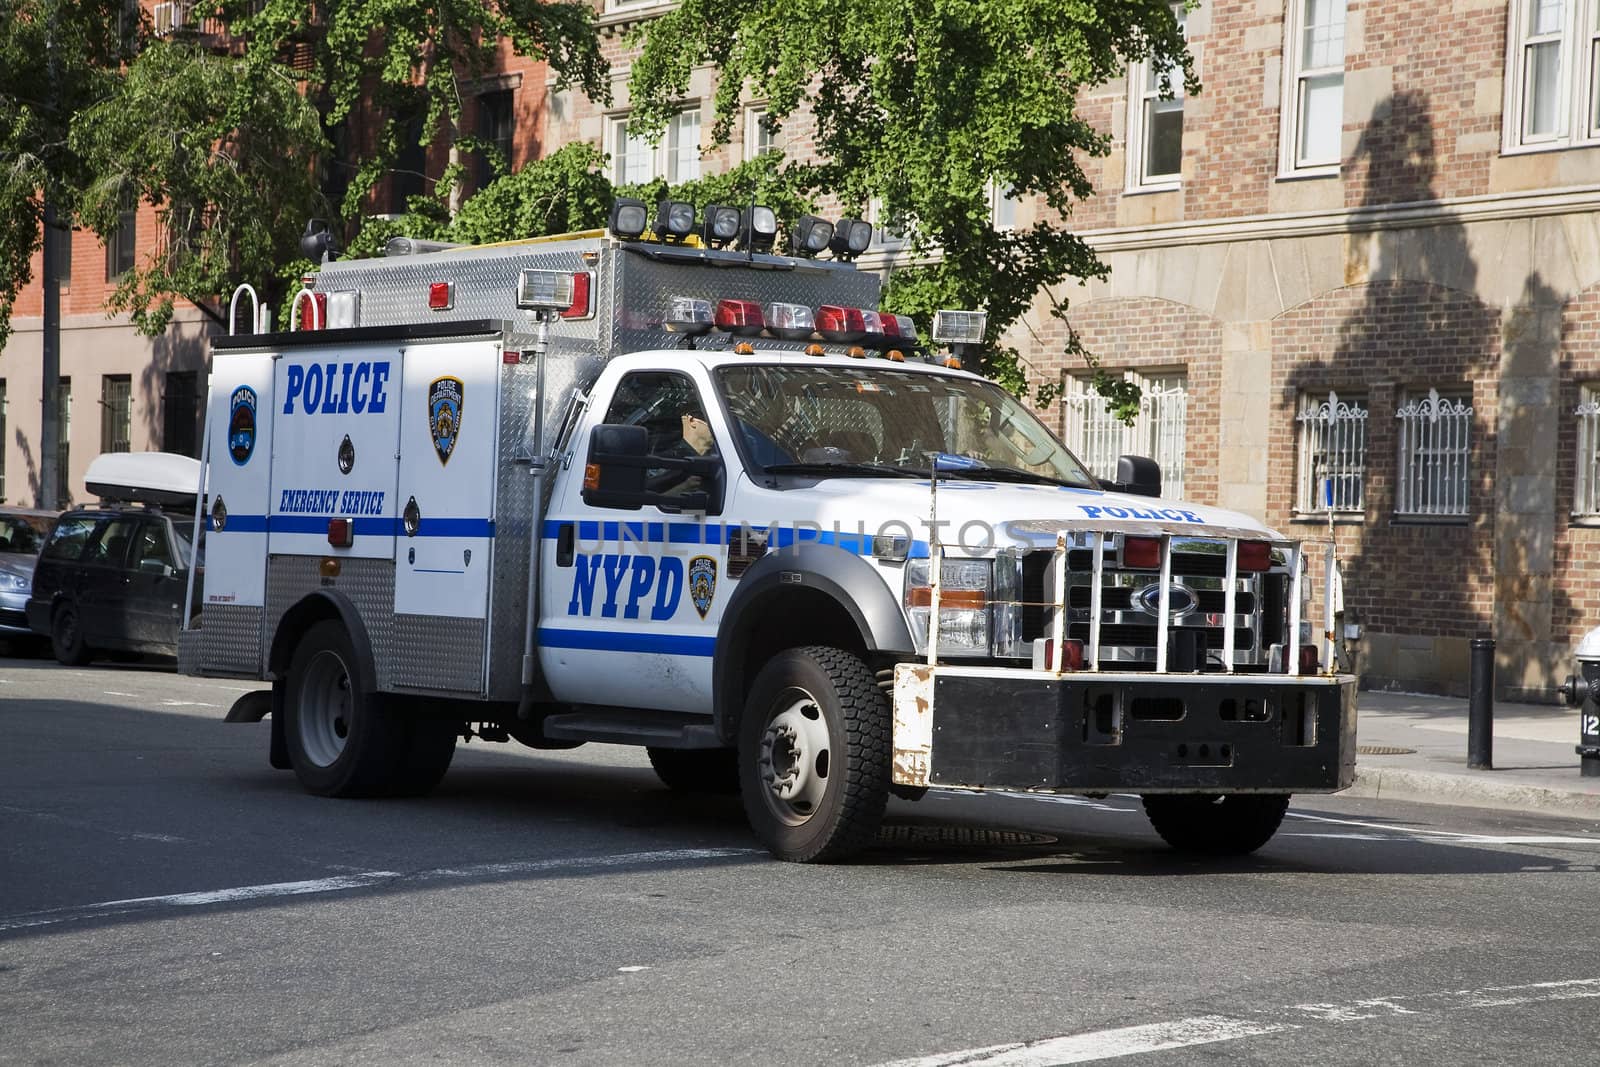 Police truck on patrol in New York city.